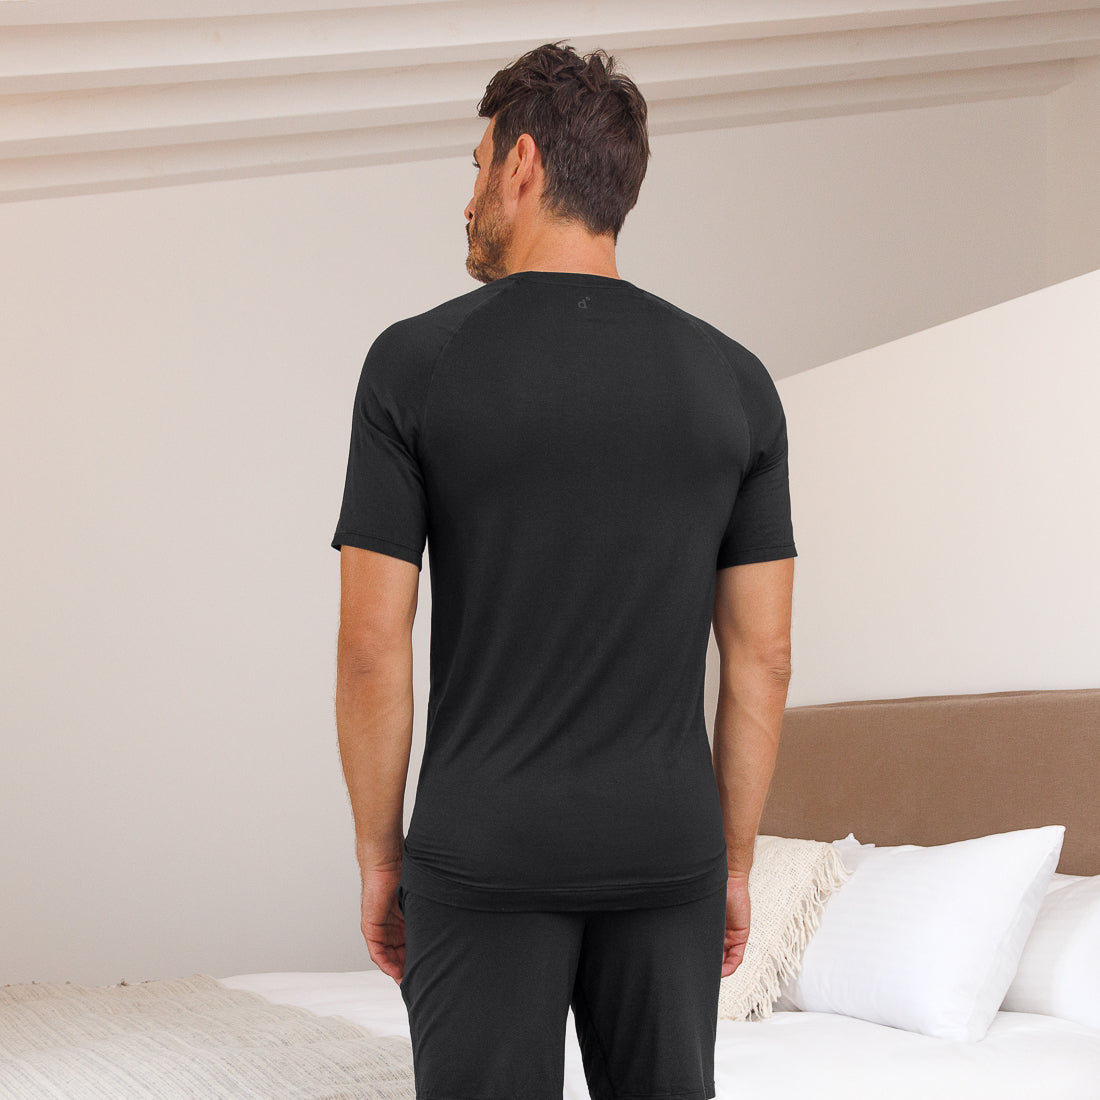 Modal+Spandex Sweatproof High Quality Deep V-neck Men Underwear